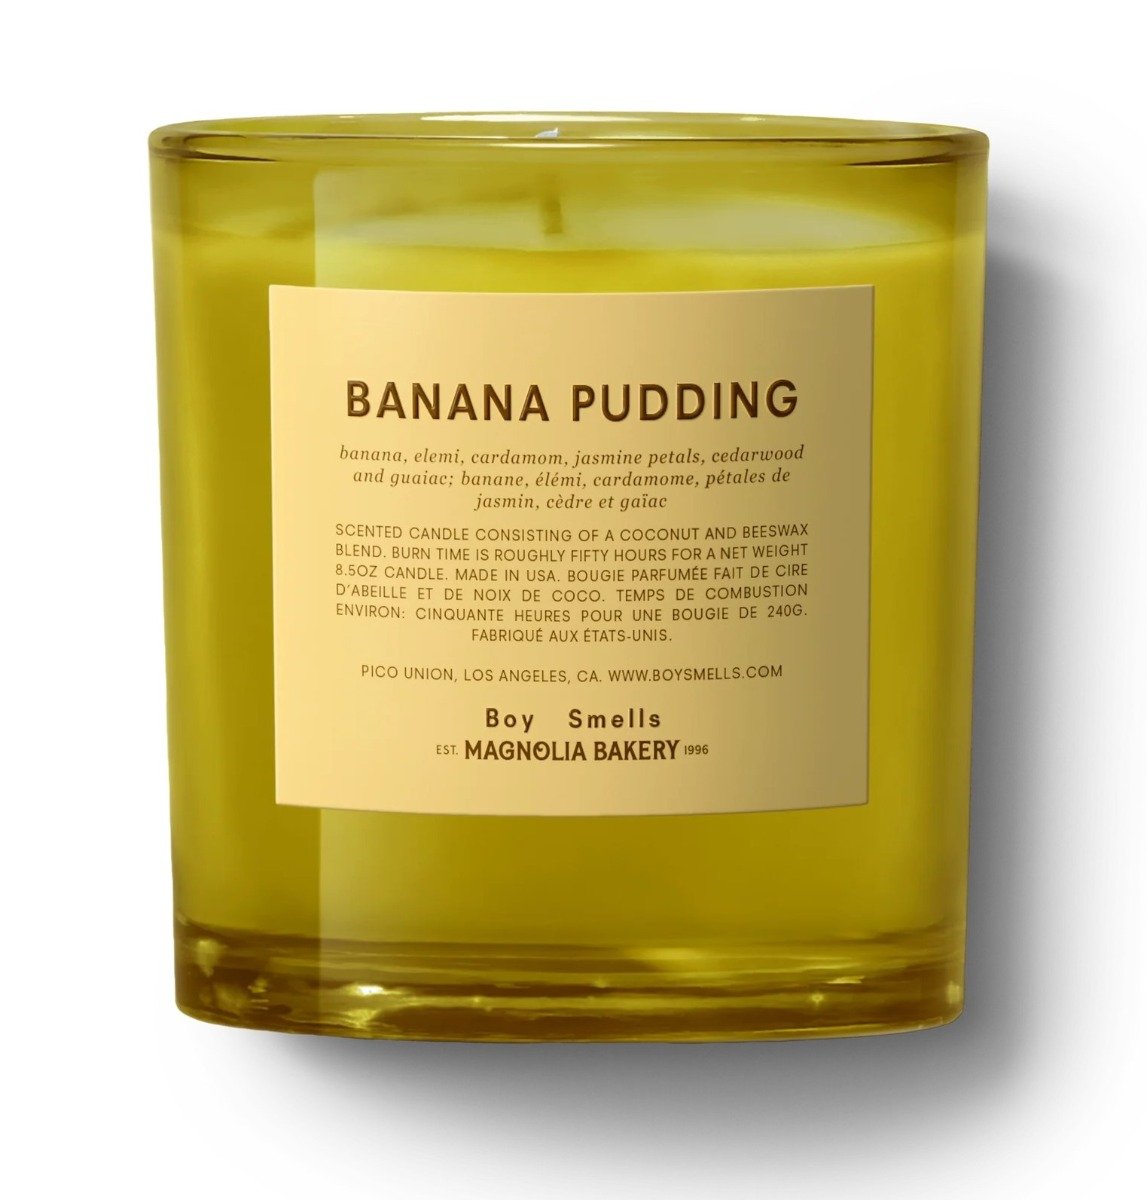 Magnolia Bakery's Banana Pudding Candle